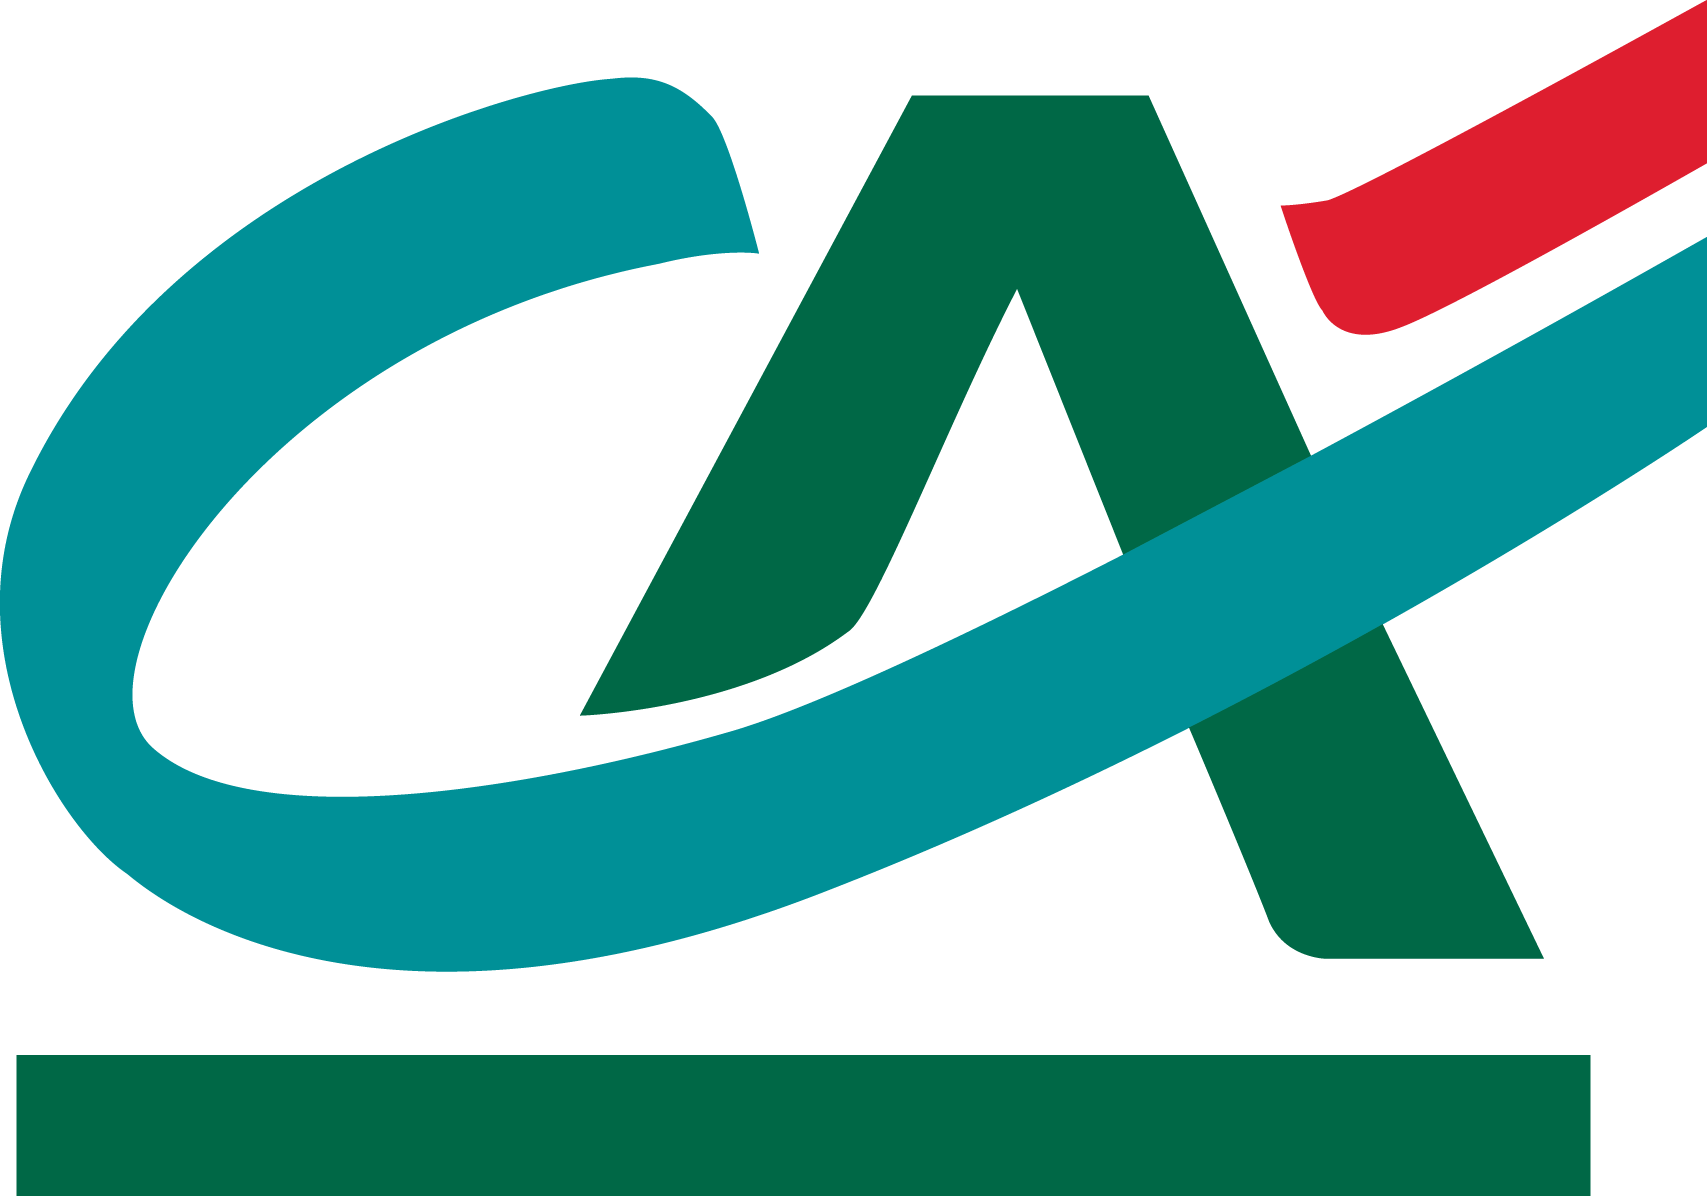 logo CA